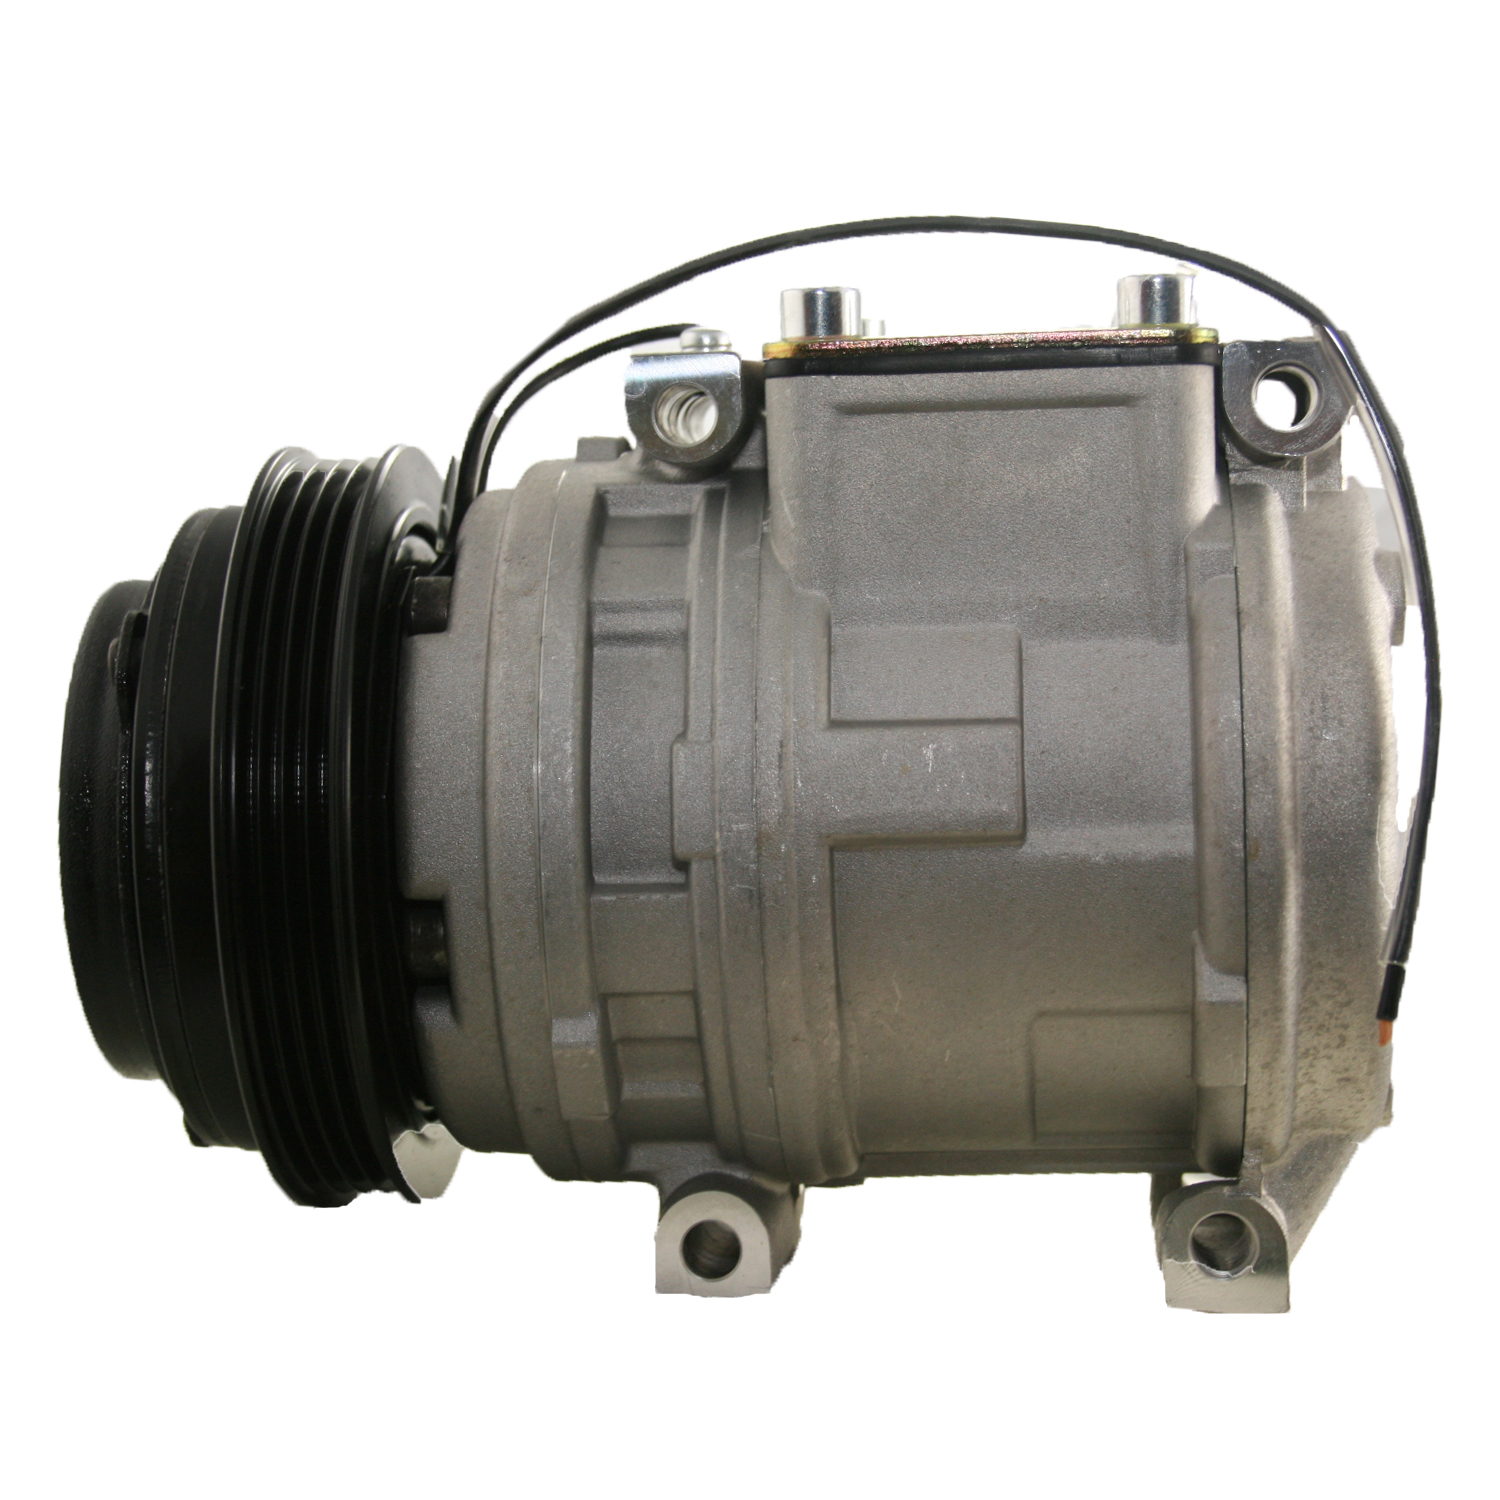 TCW Compressor 31210.407NEW New Product Image field_60b6a13a6e67c